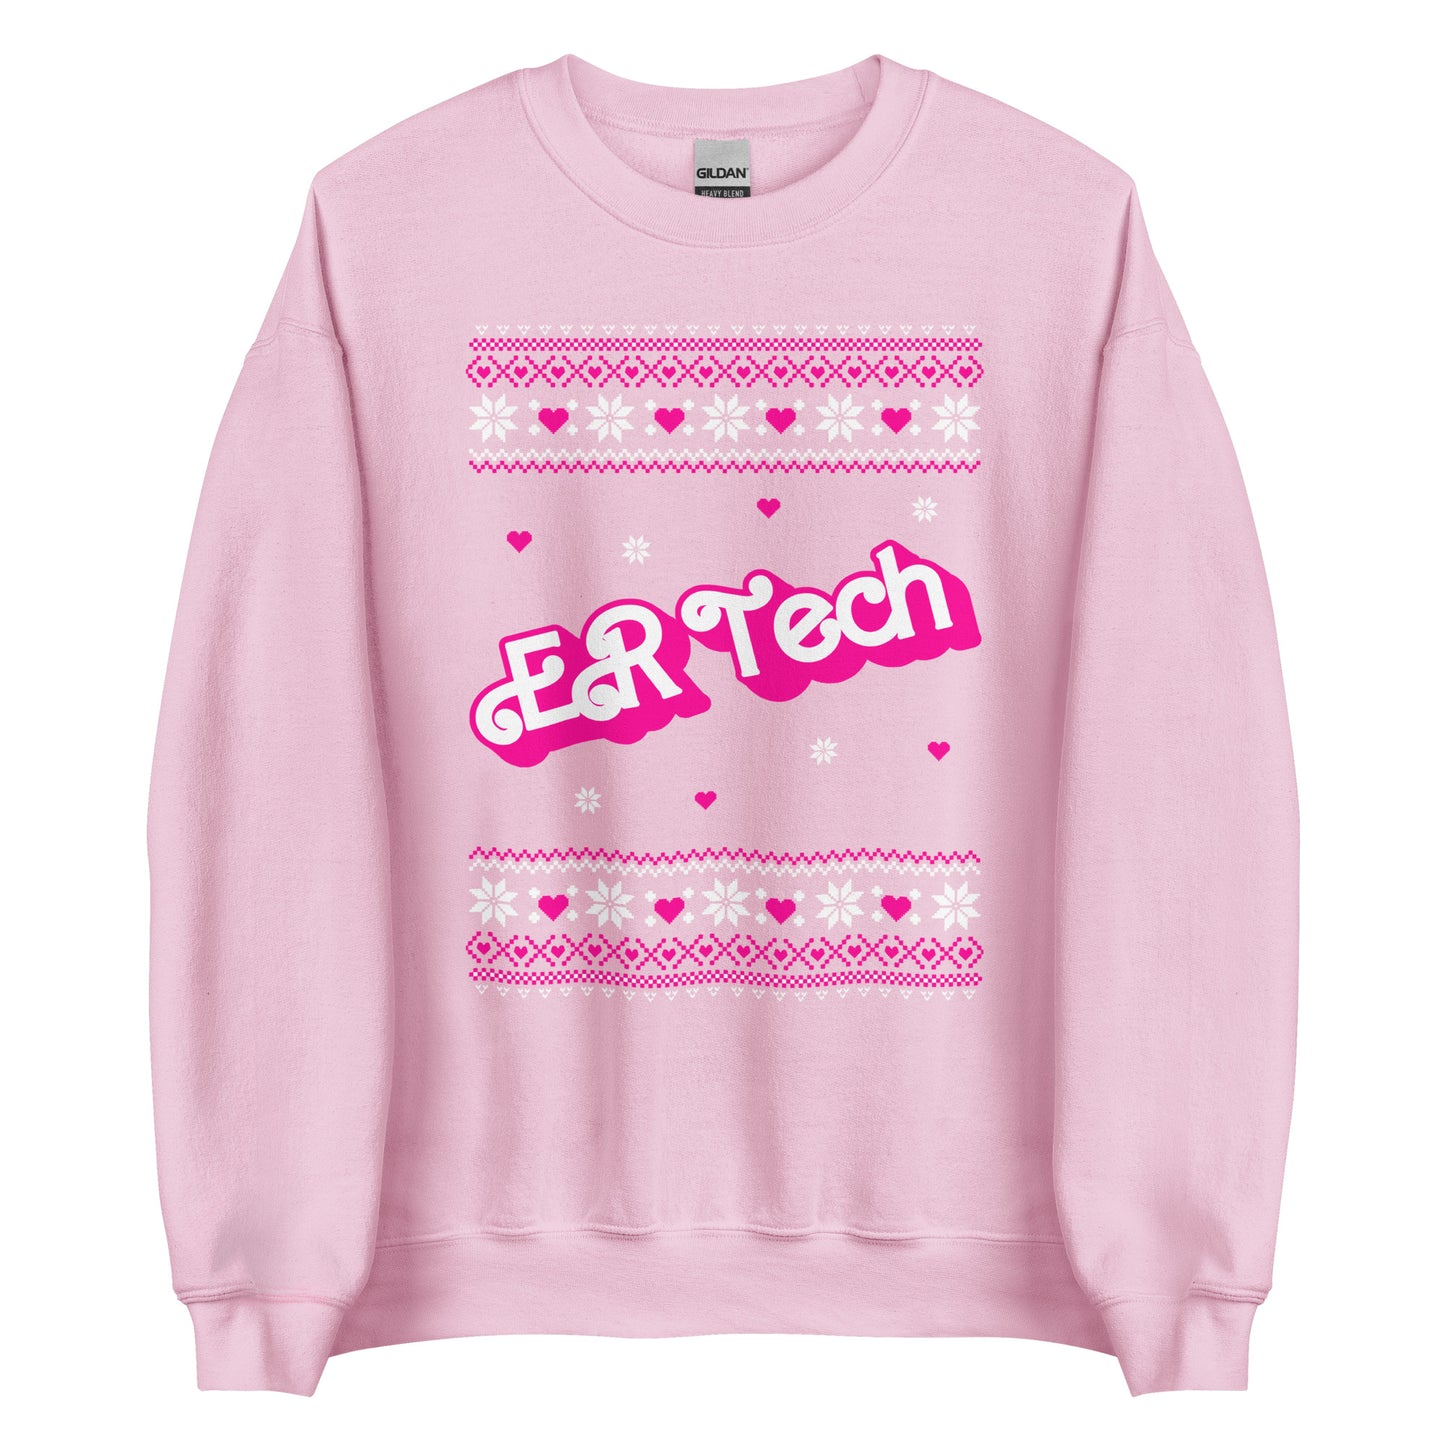 Barbie ER Tech Ugly Christmas Sweater